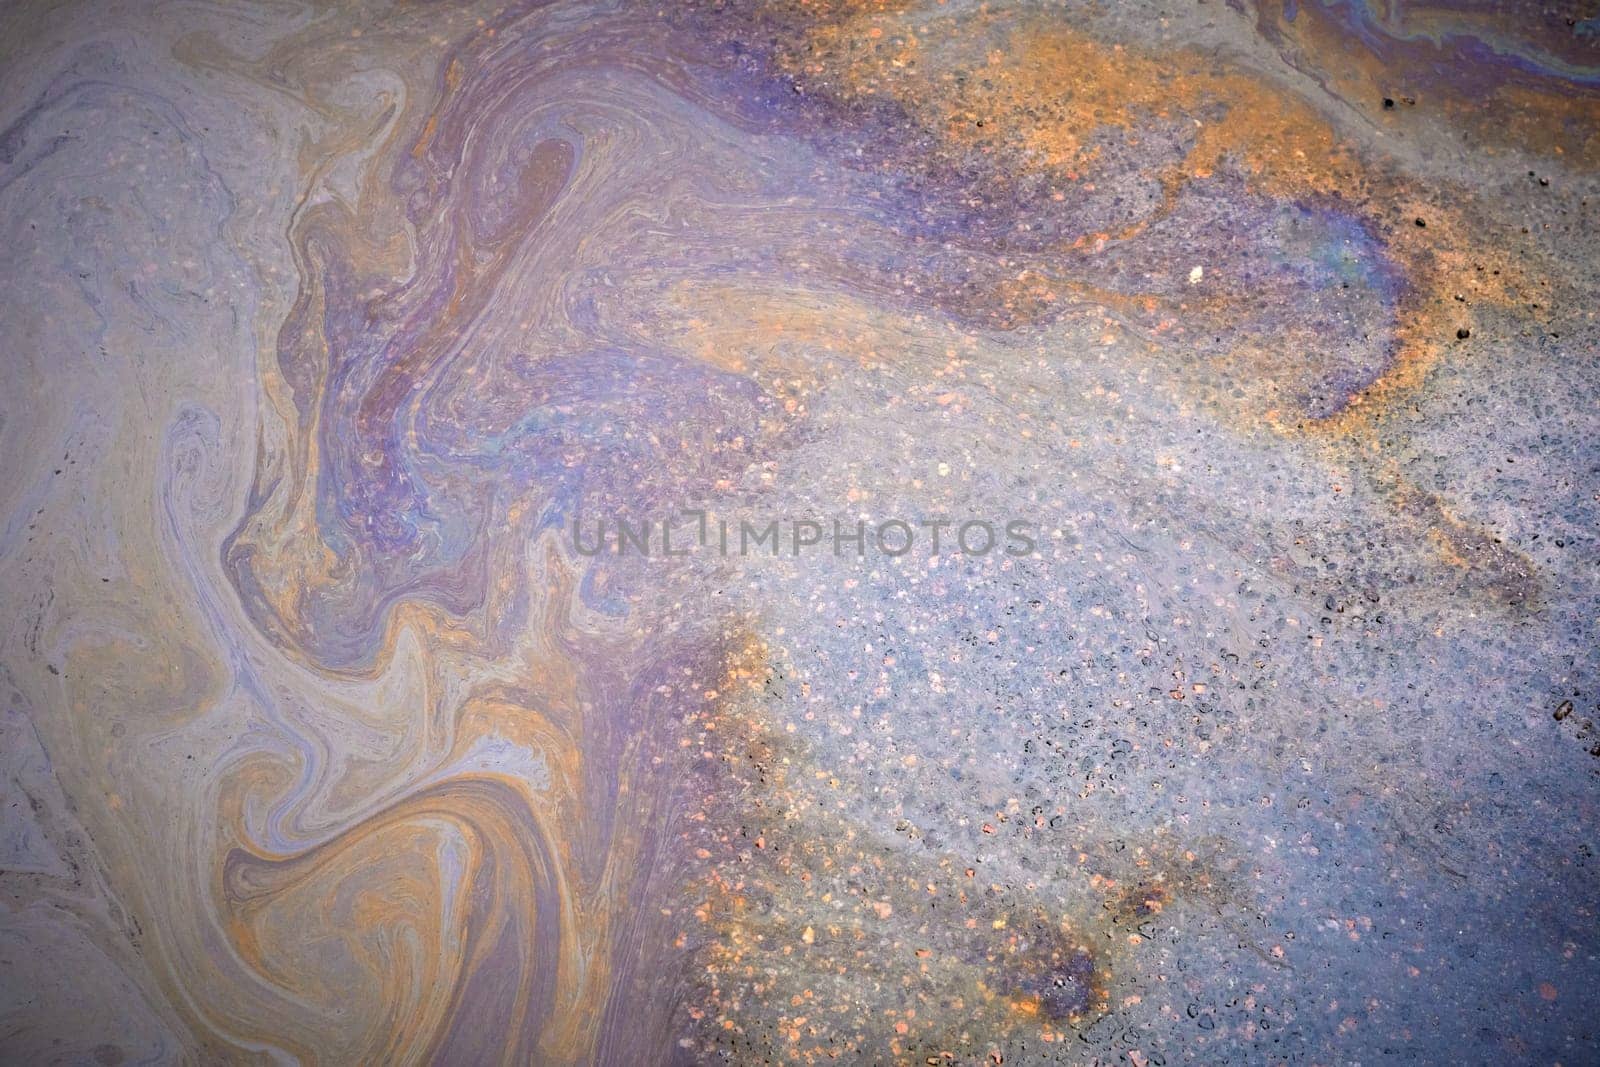 Textured stain of fuel or oil on wet asphalt on a rainy day by AliaksandrFilimonau